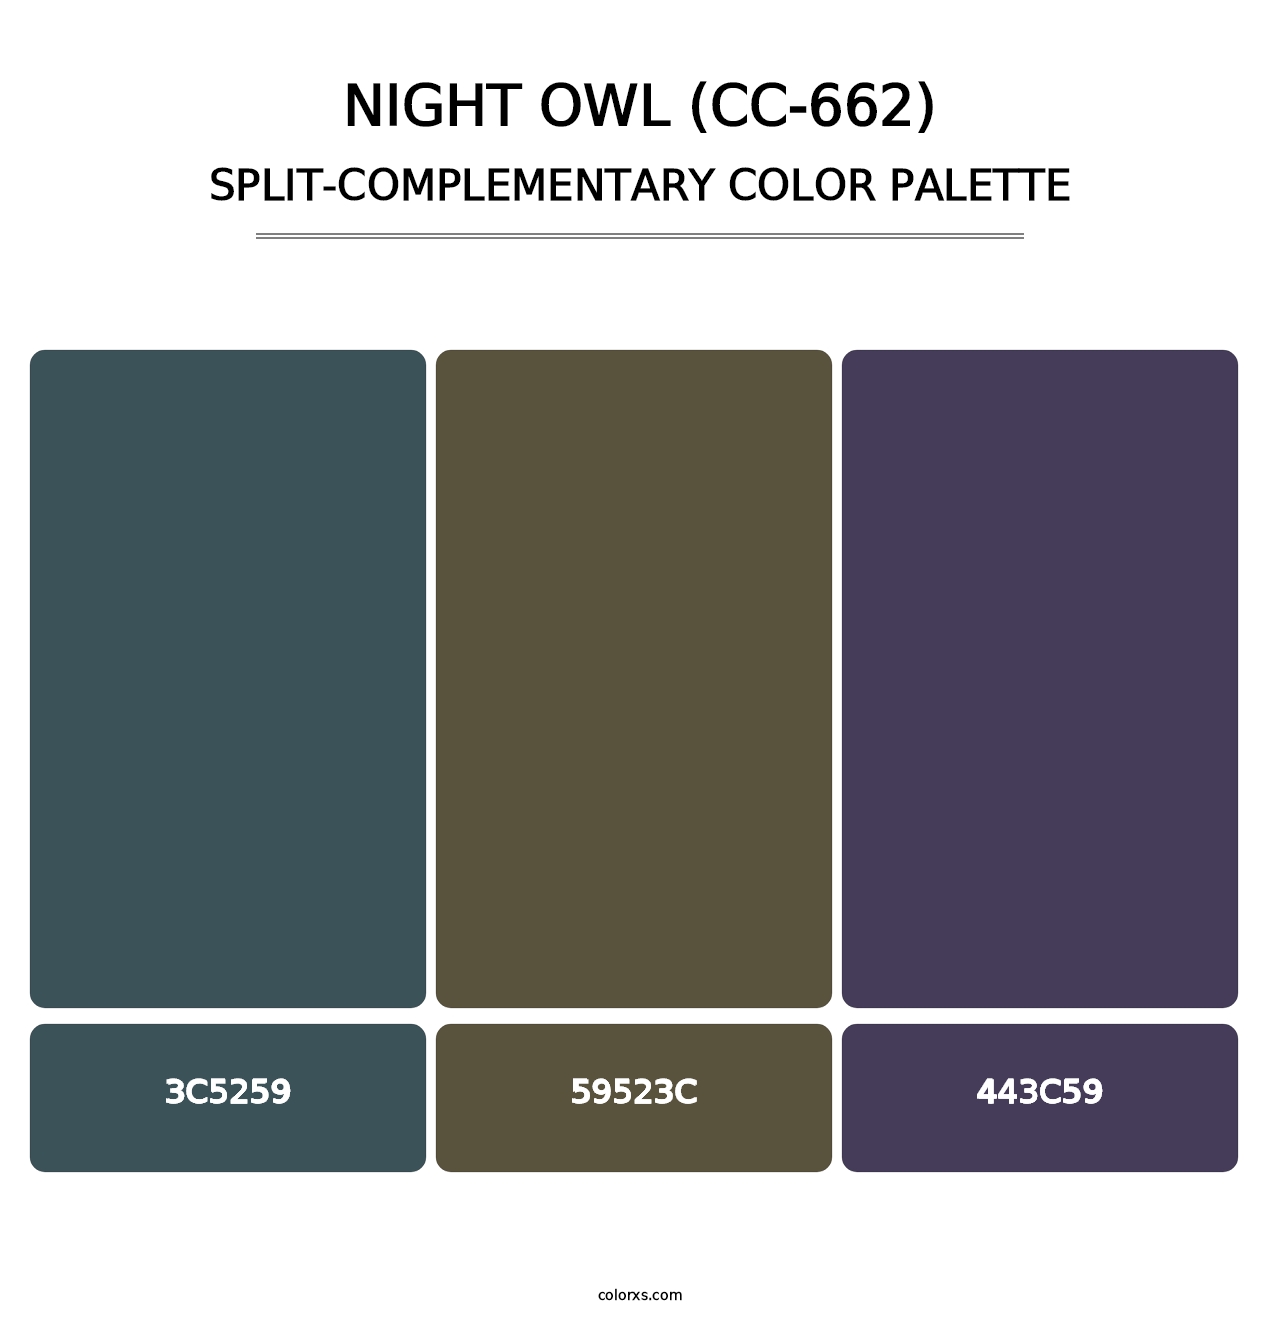 Night Owl (CC-662) - Split-Complementary Color Palette